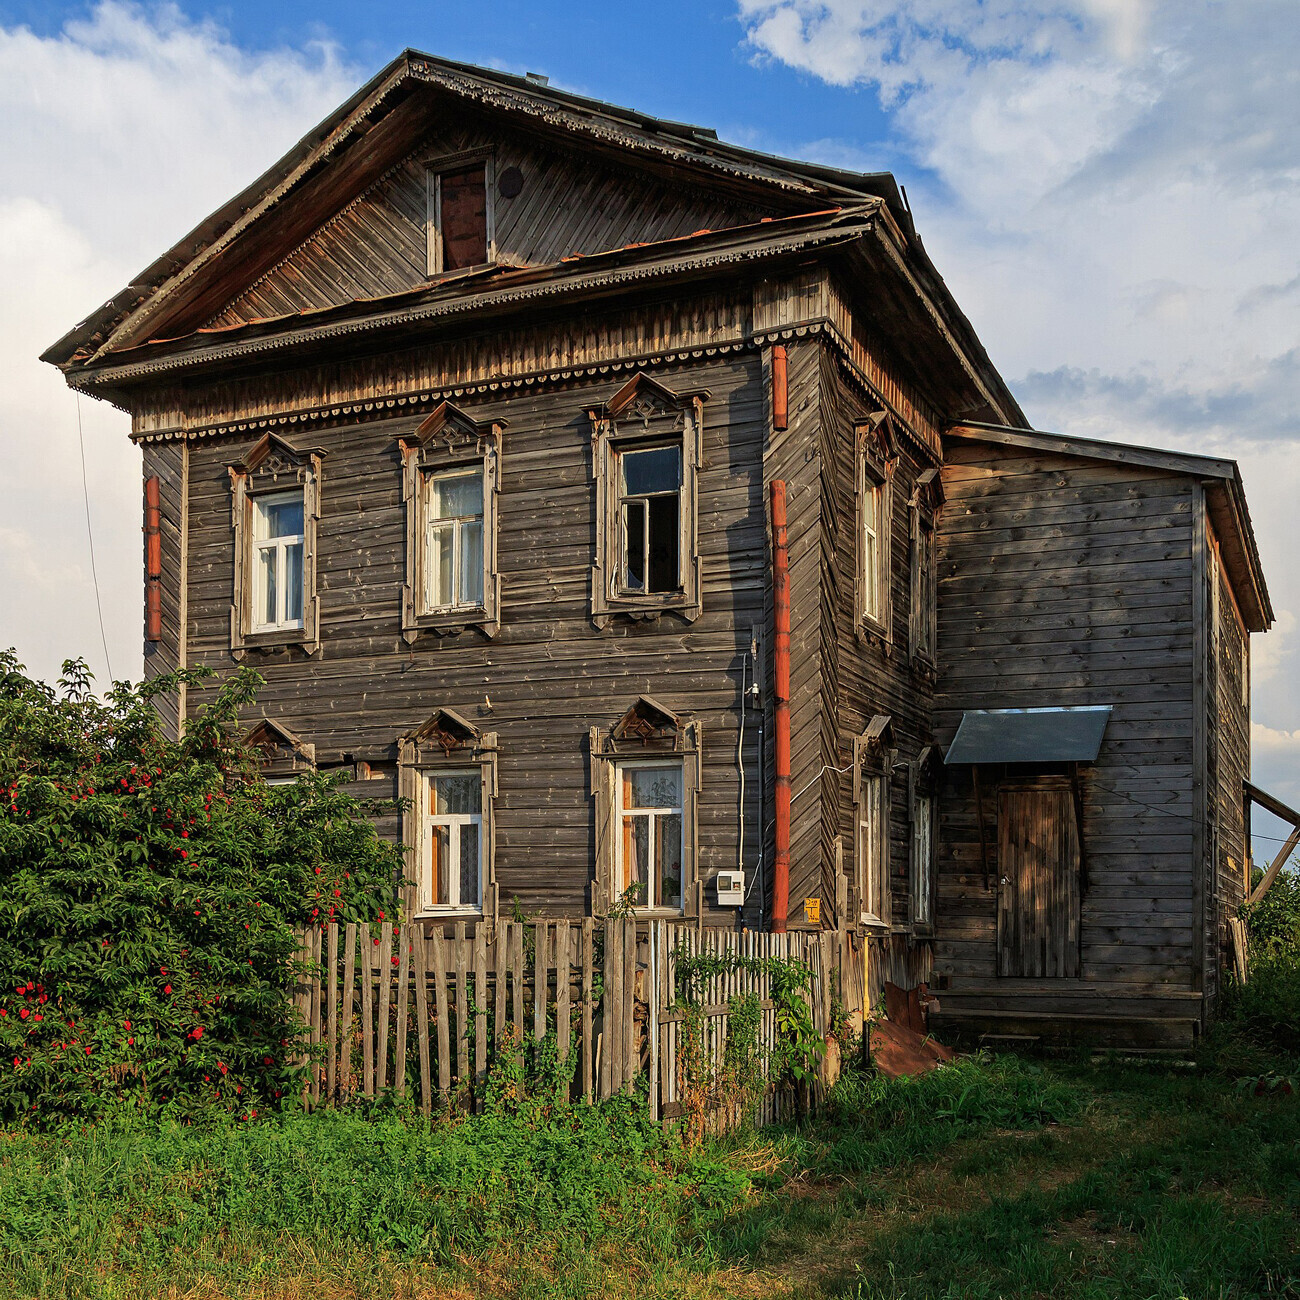 Casa de madeira na rua Nikolskaya

